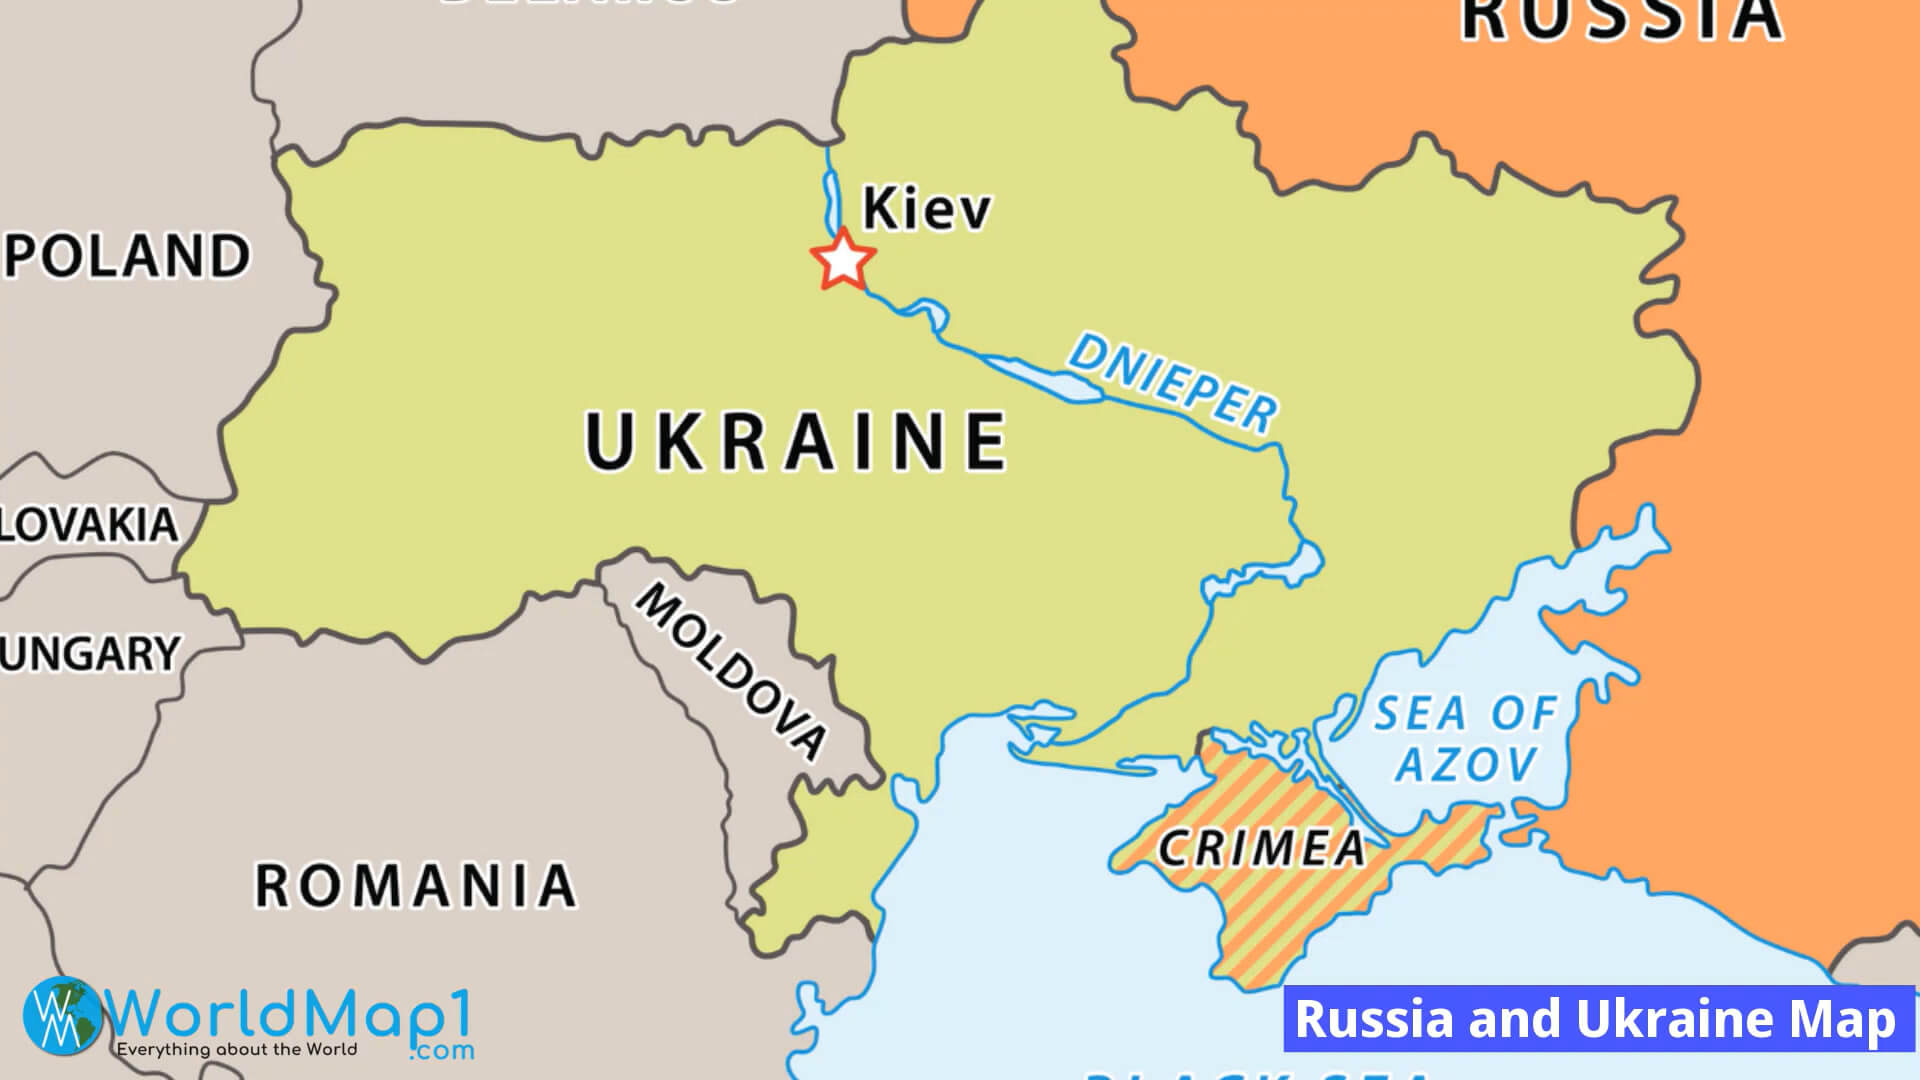 Russia and Ukraine Map